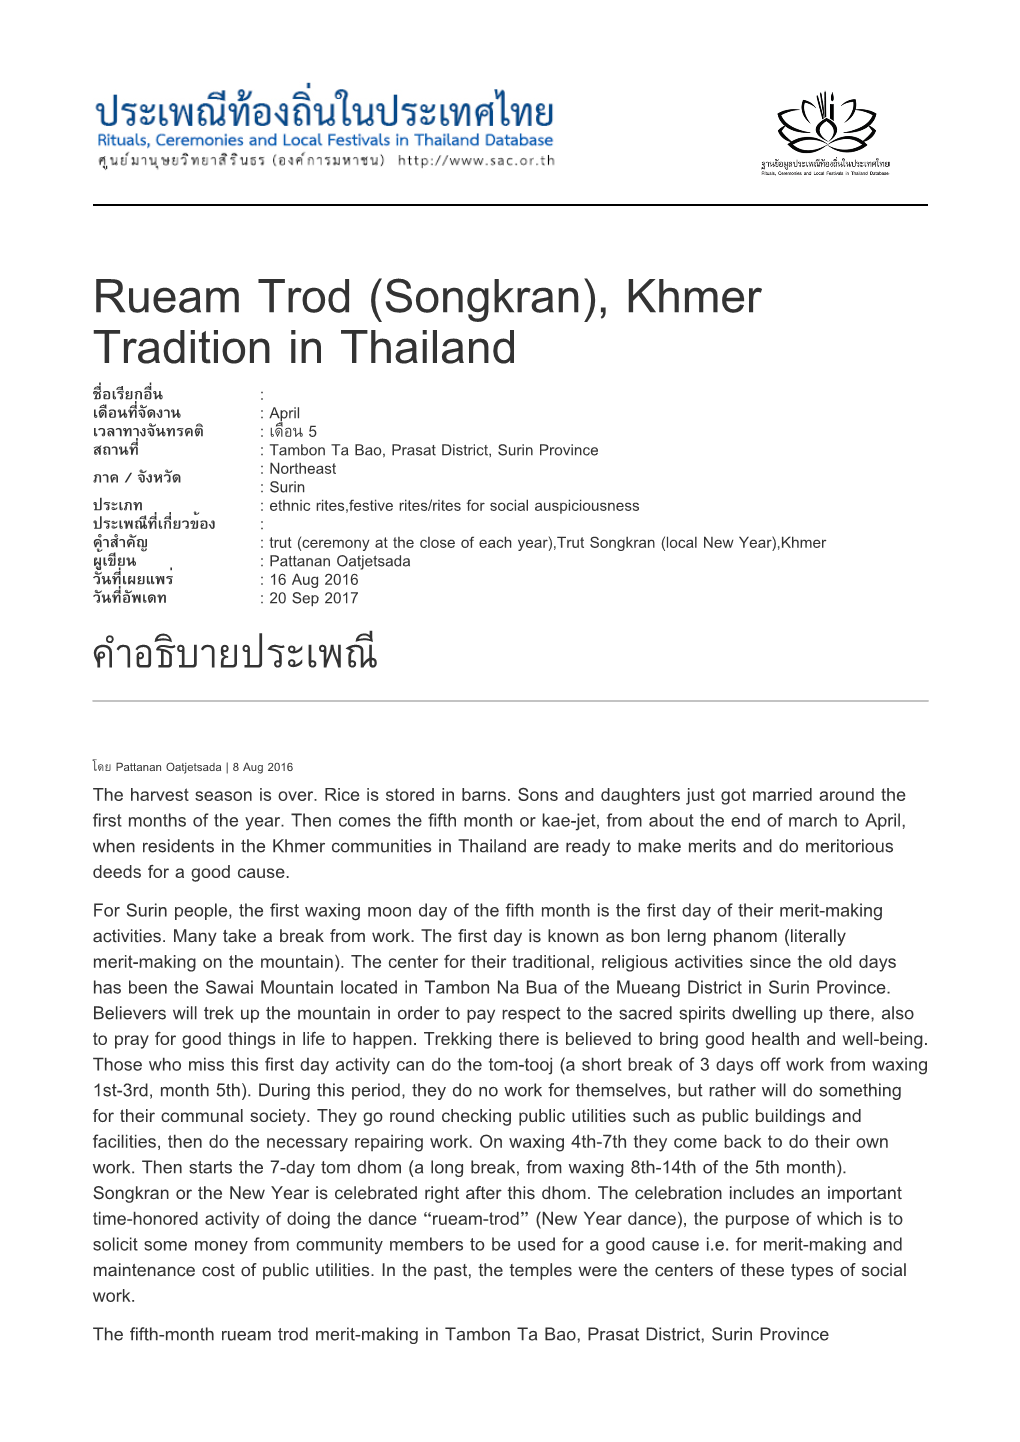 Rueam Trod (Songkran), Khmer Tradition in Thailand